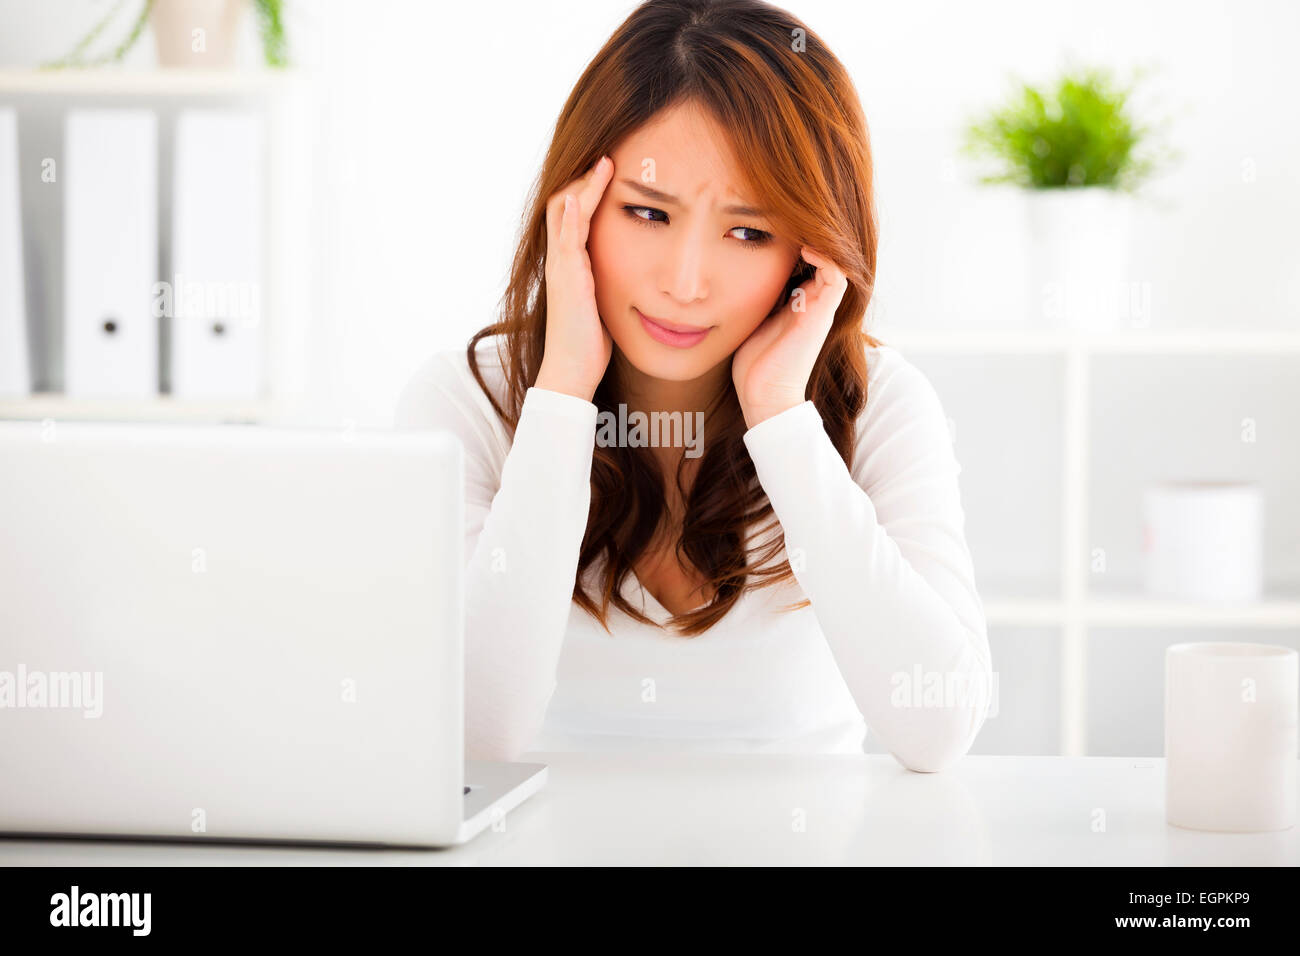 Souligné young woman with laptop Banque D'Images